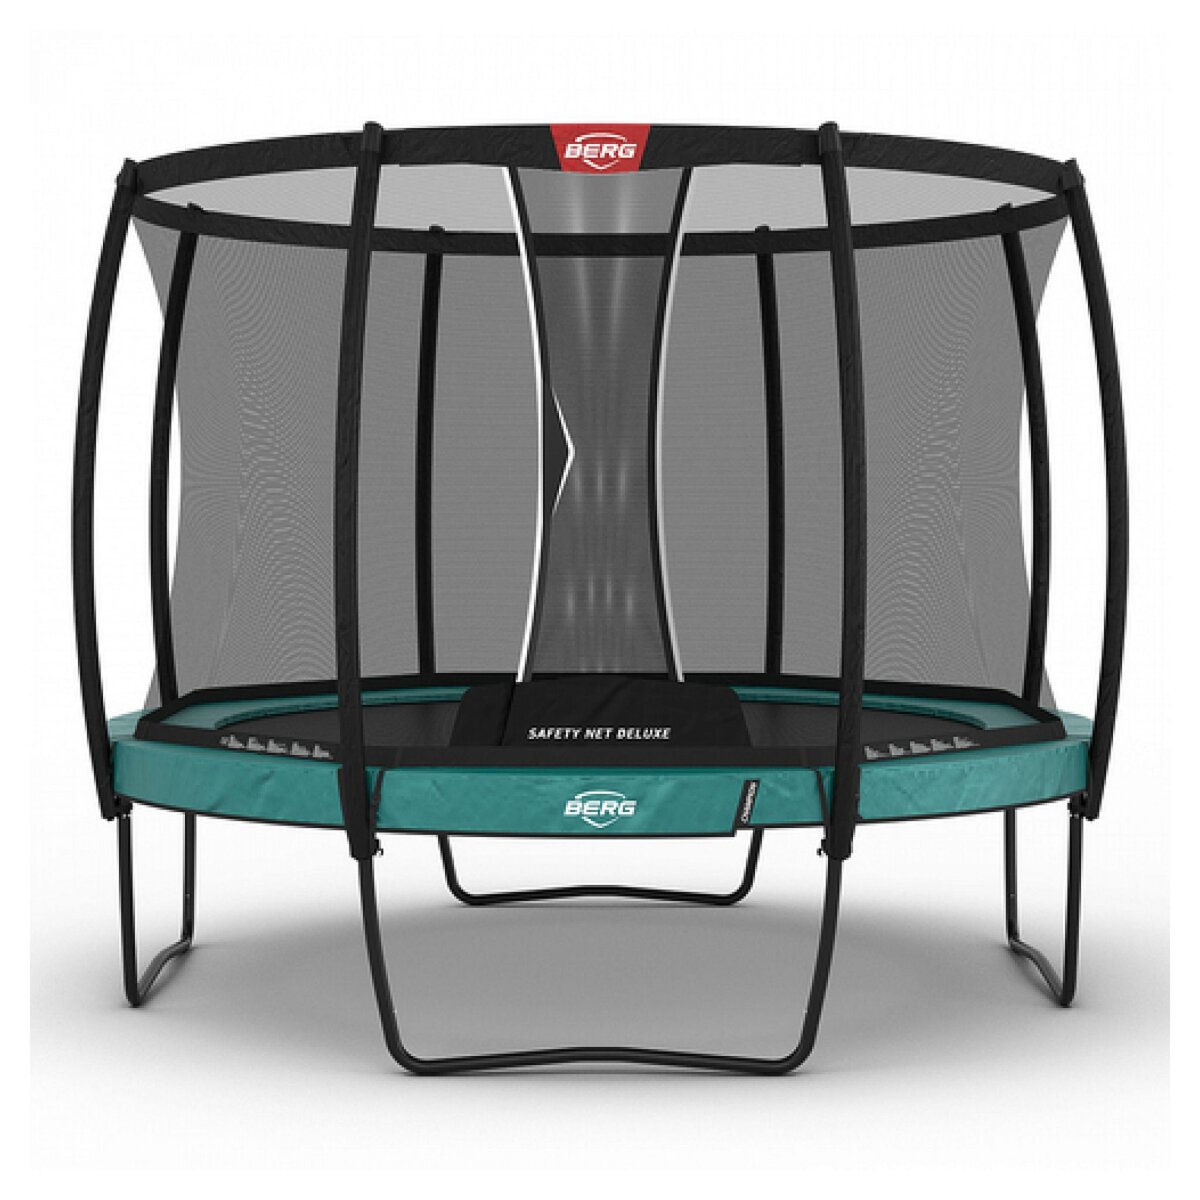 Berg Champion trampoline Regular 330 cm green + Safety Net Deluxe